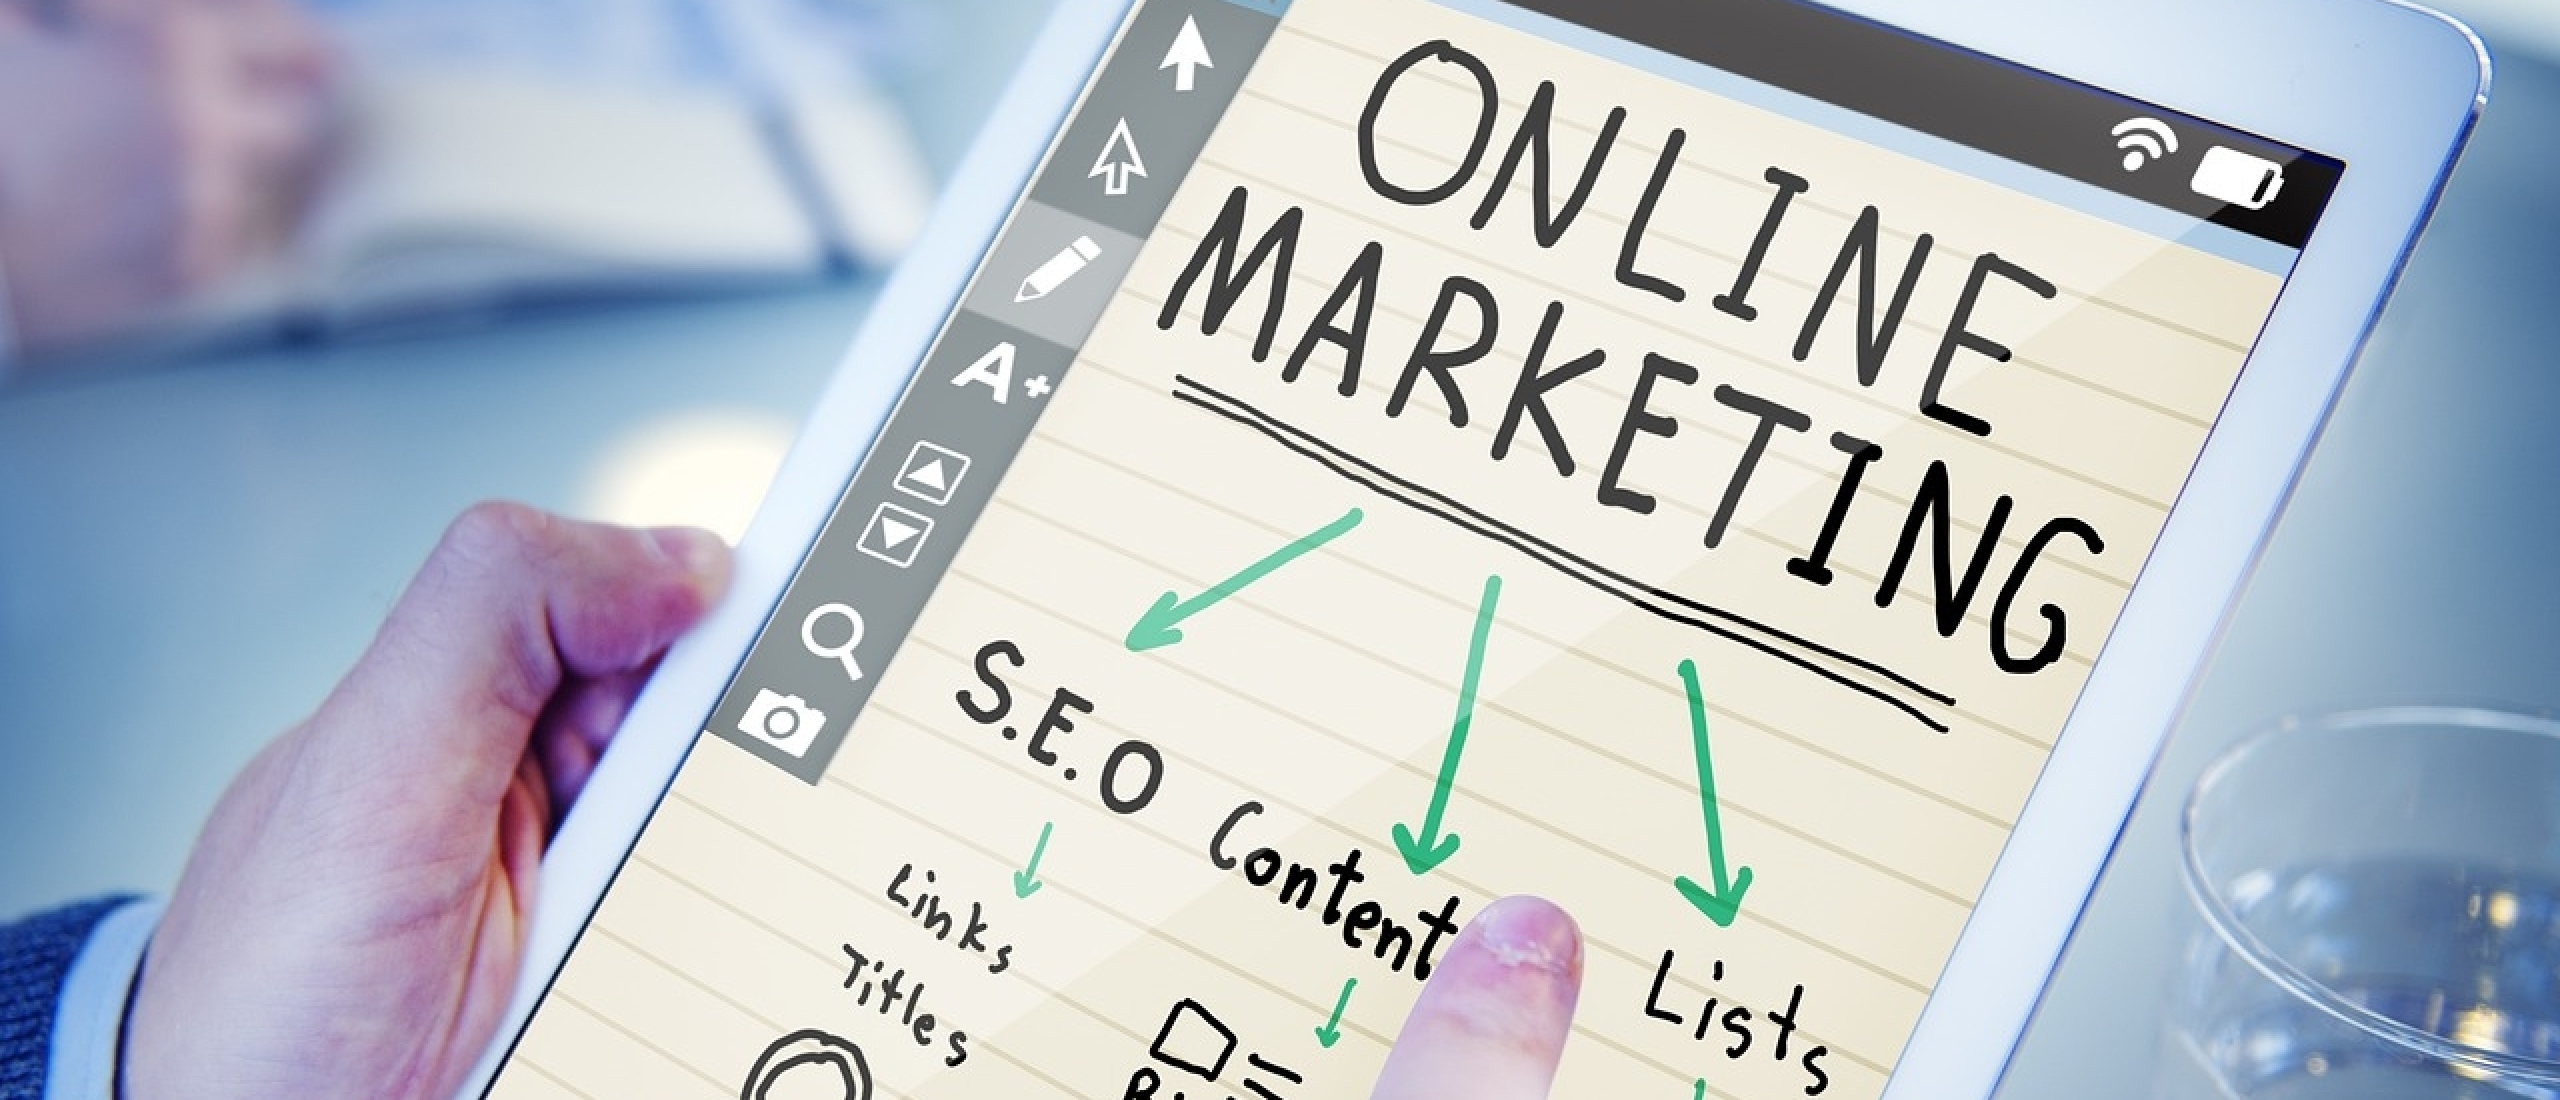 Online marketing tips